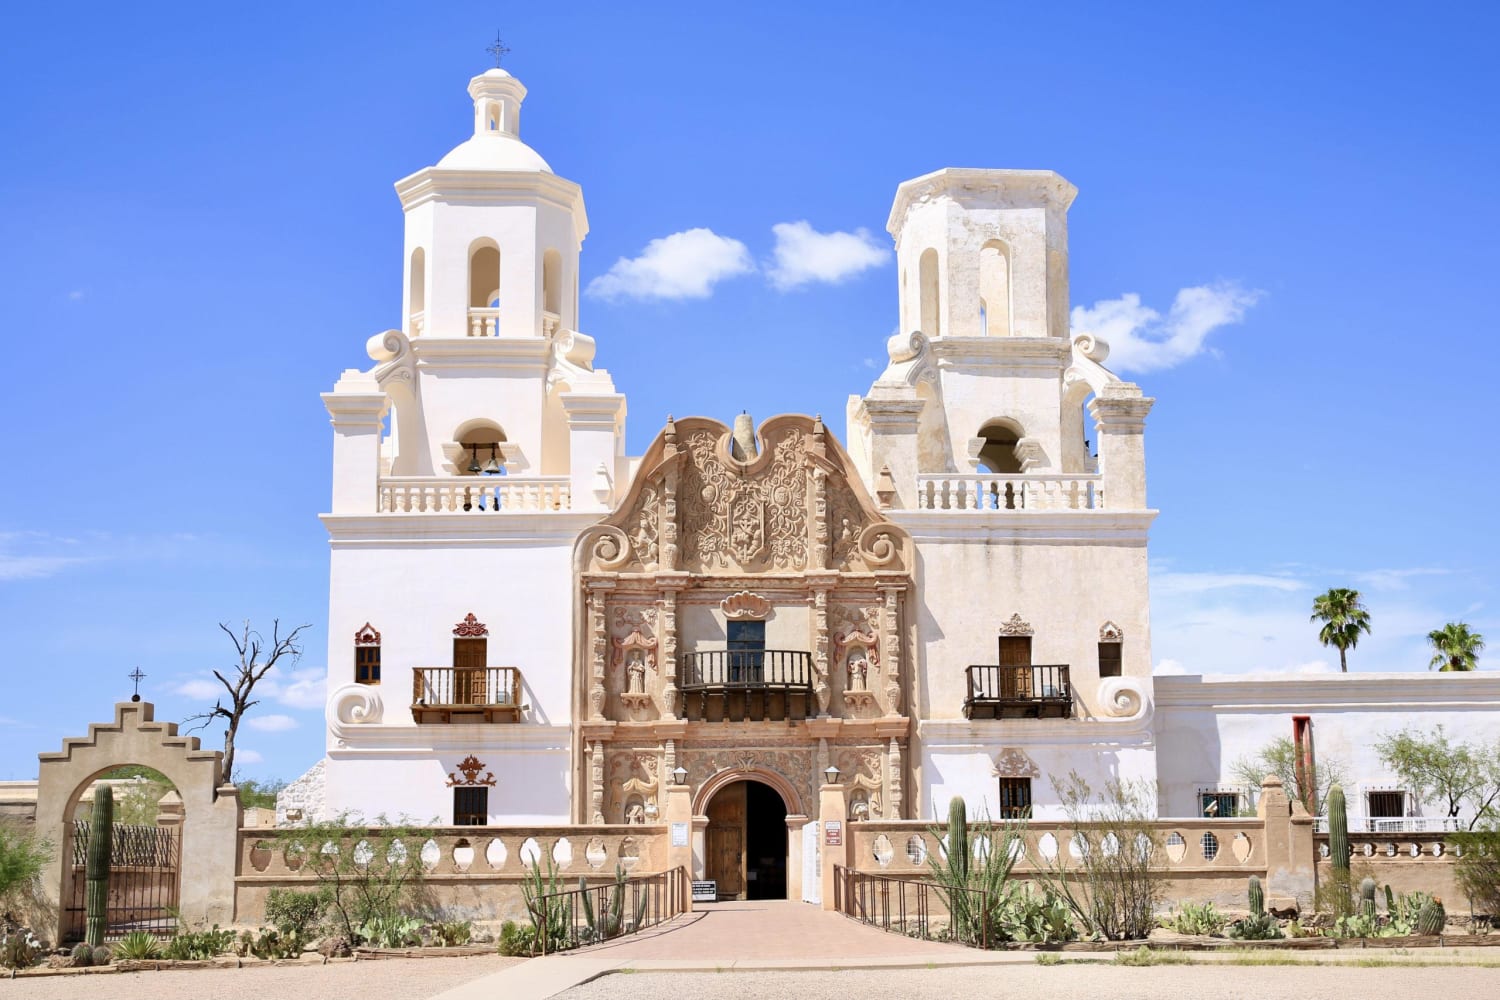 Mission San Xavier del bac, a historic Spanish Catholic church, in Tucson, Arizona, US